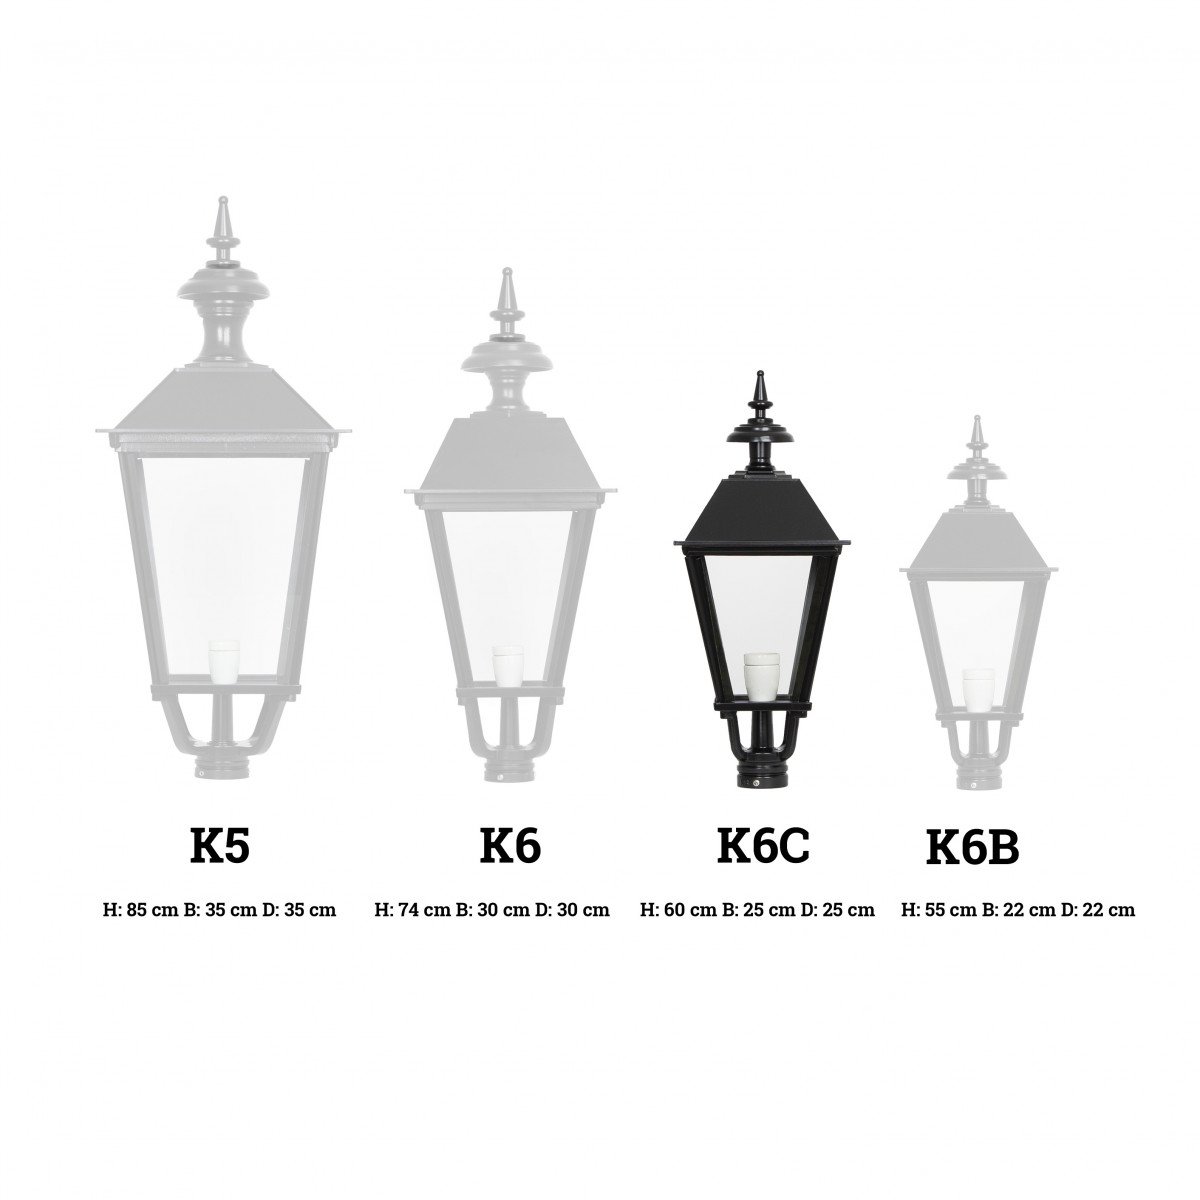 K6C post lantern